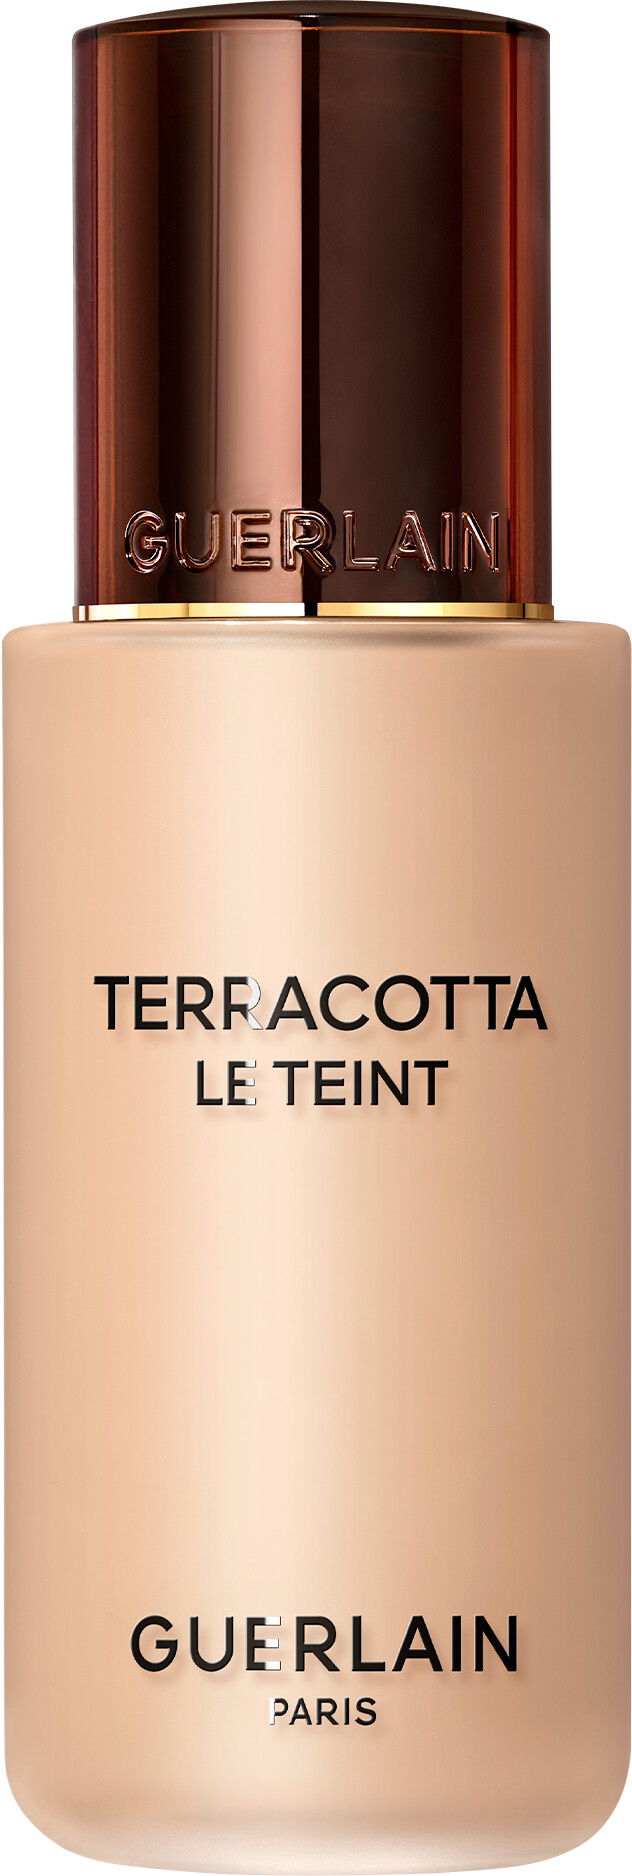 GUERLAIN Terracotta Le Teint Healthy Glow Foundation 35ml 2.5N - Neutral